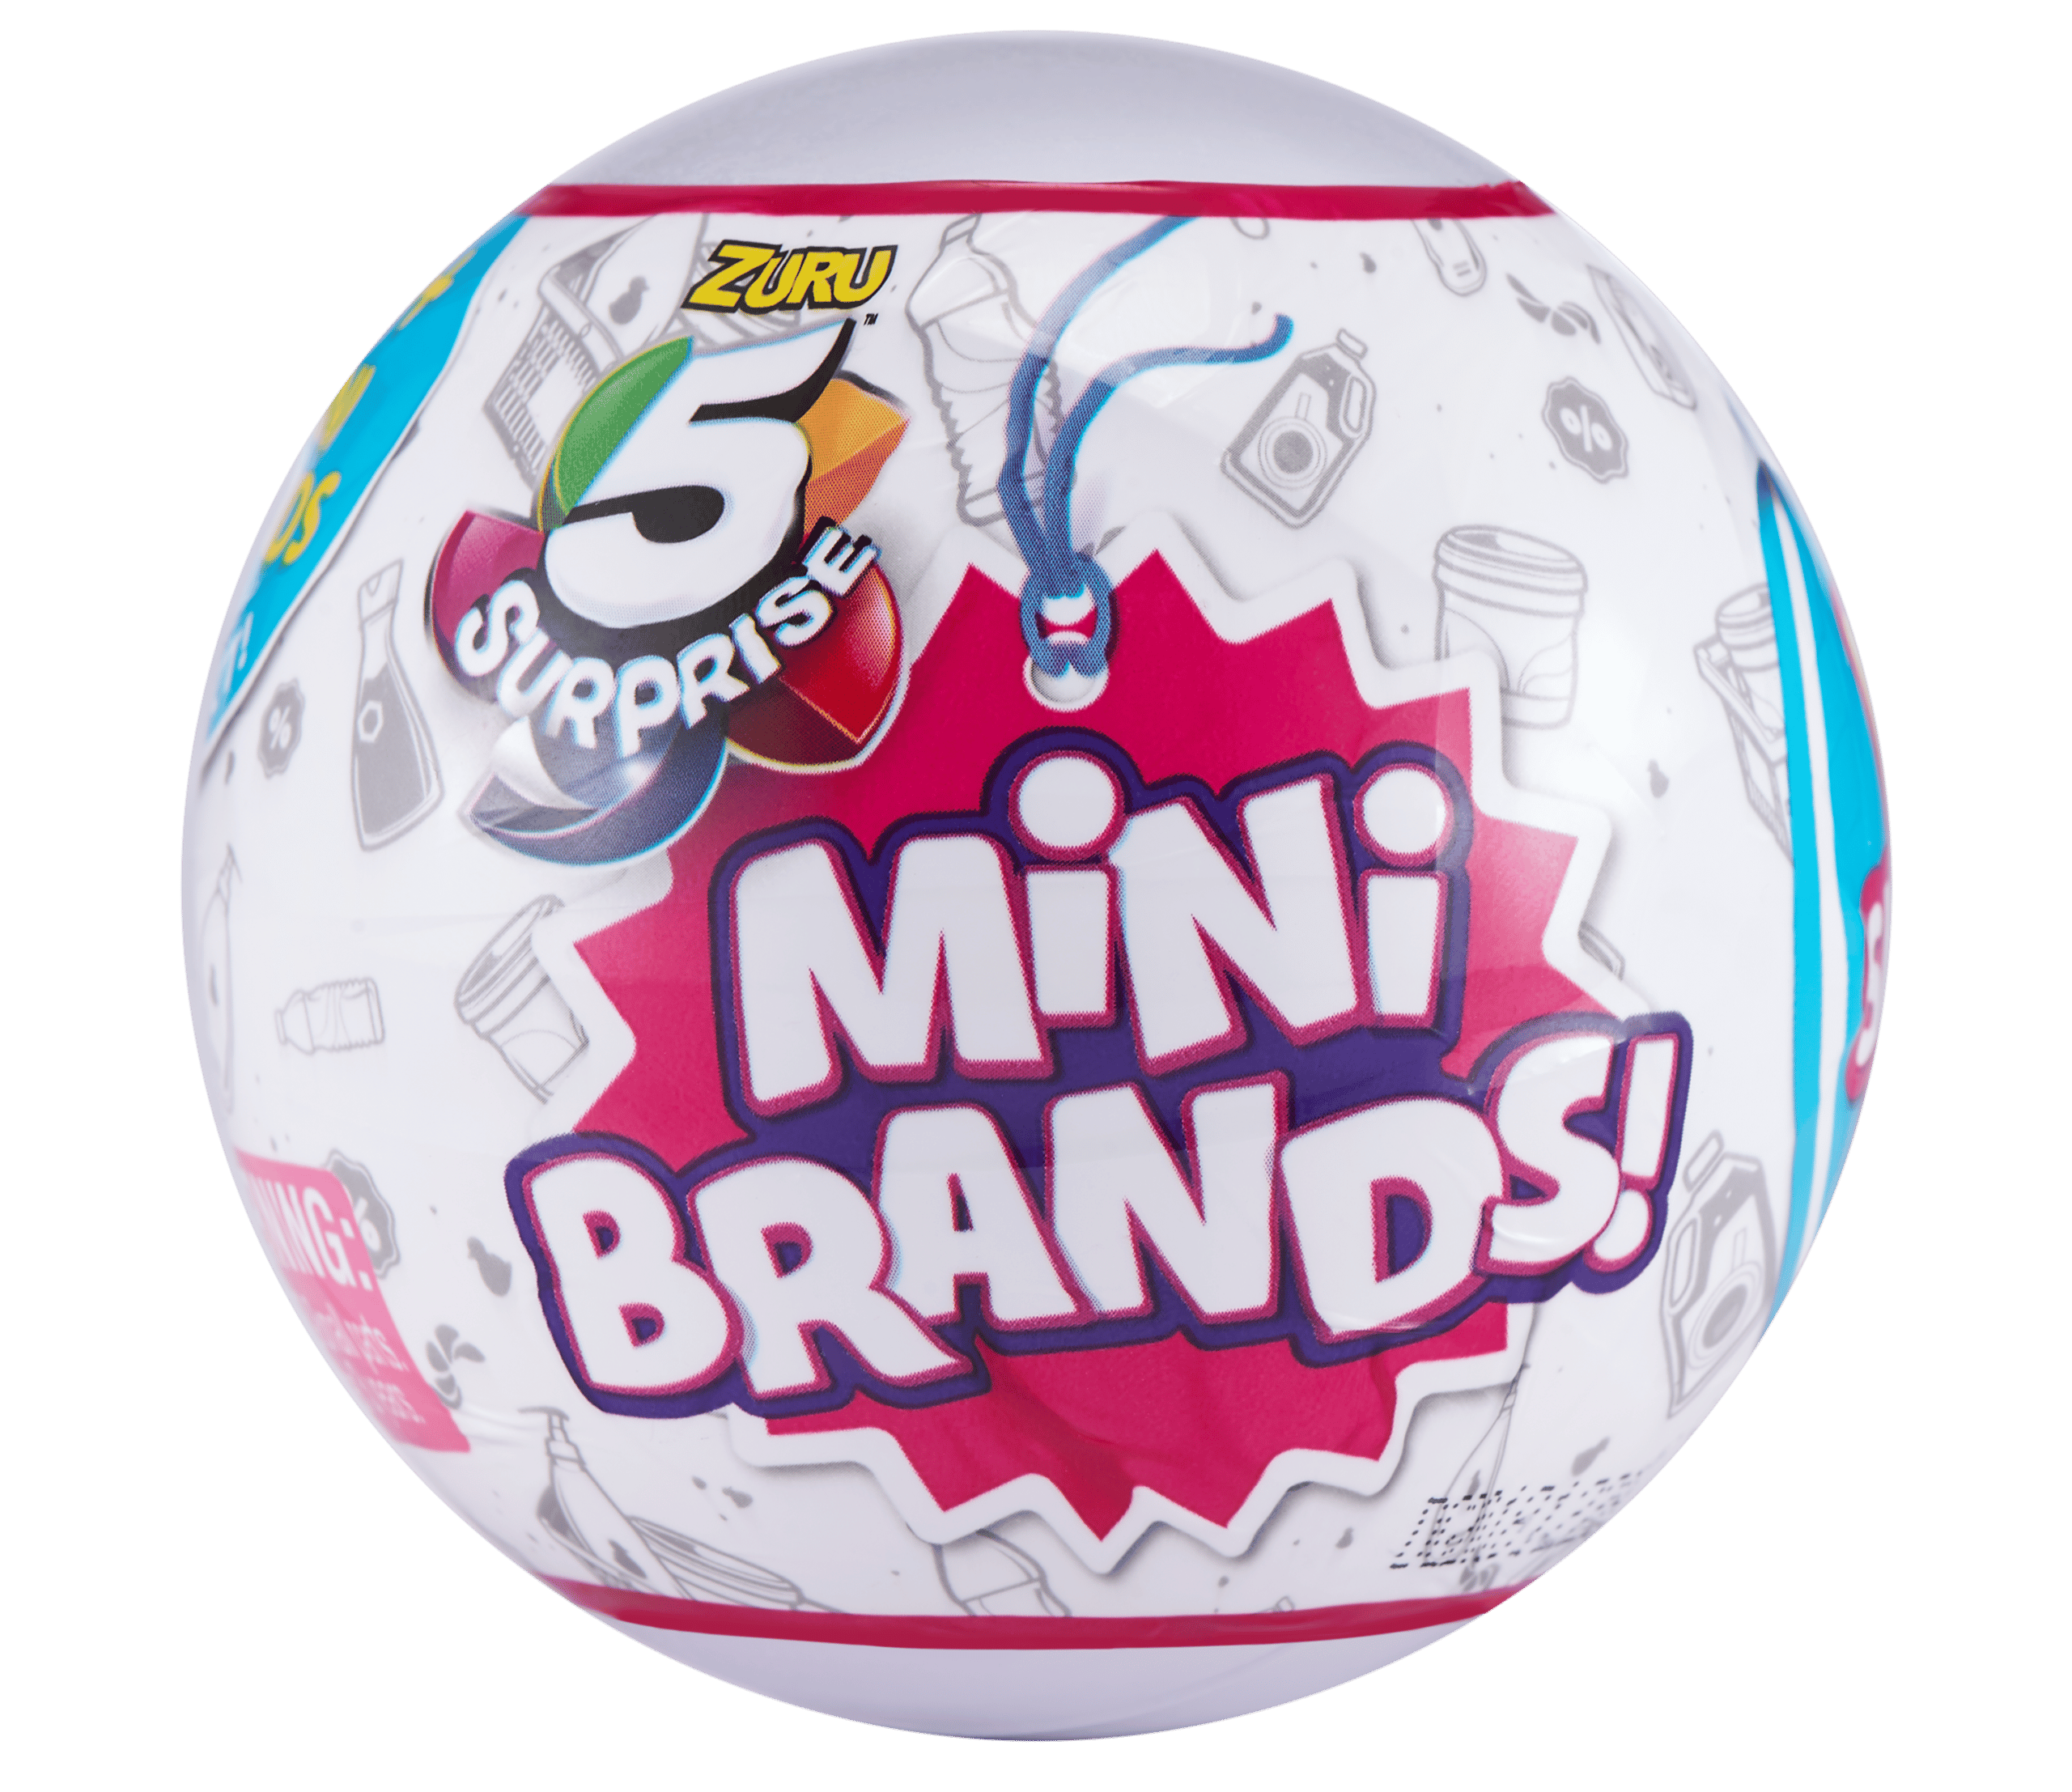 Clearance SALE Most minis 99 cents! Details about  / Zuru Mini Brands S2